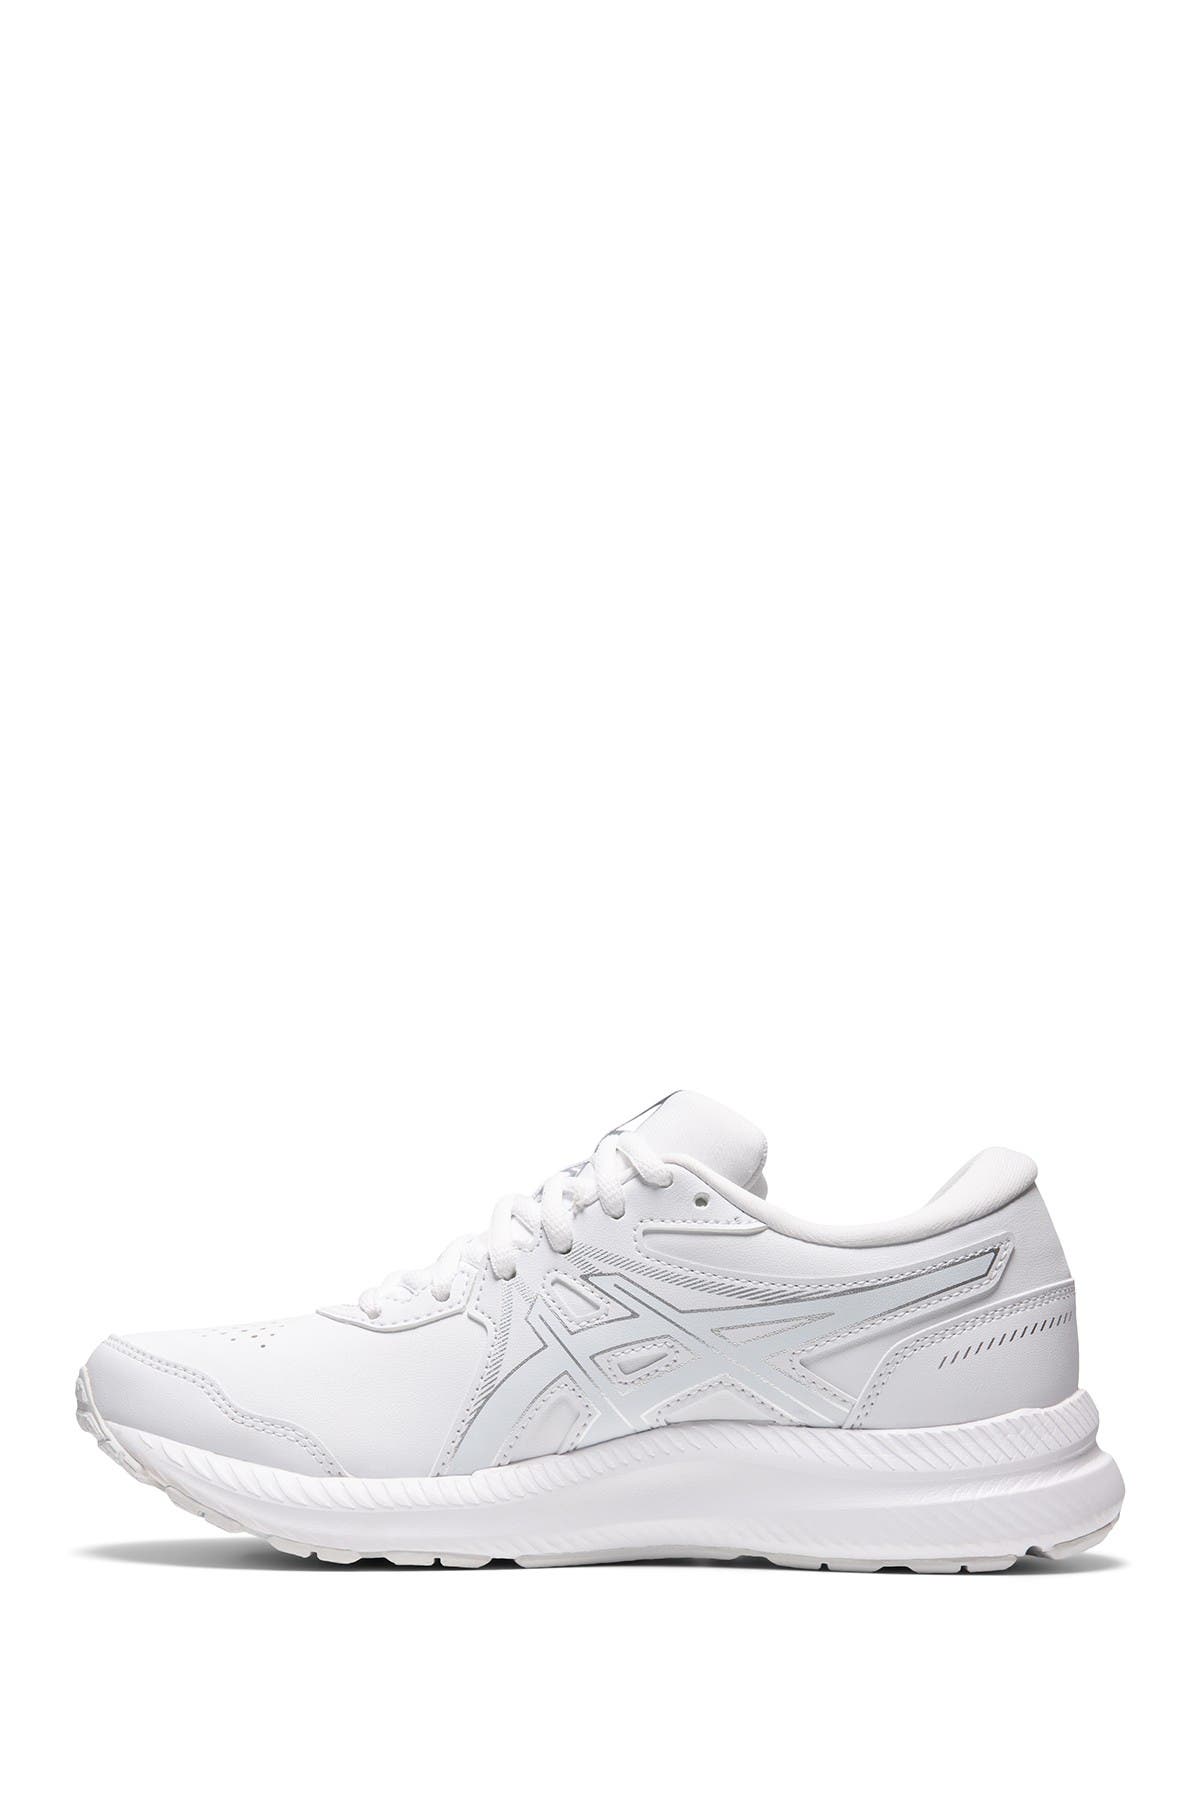 Asics Gel-contend Walker Shoe In White/white